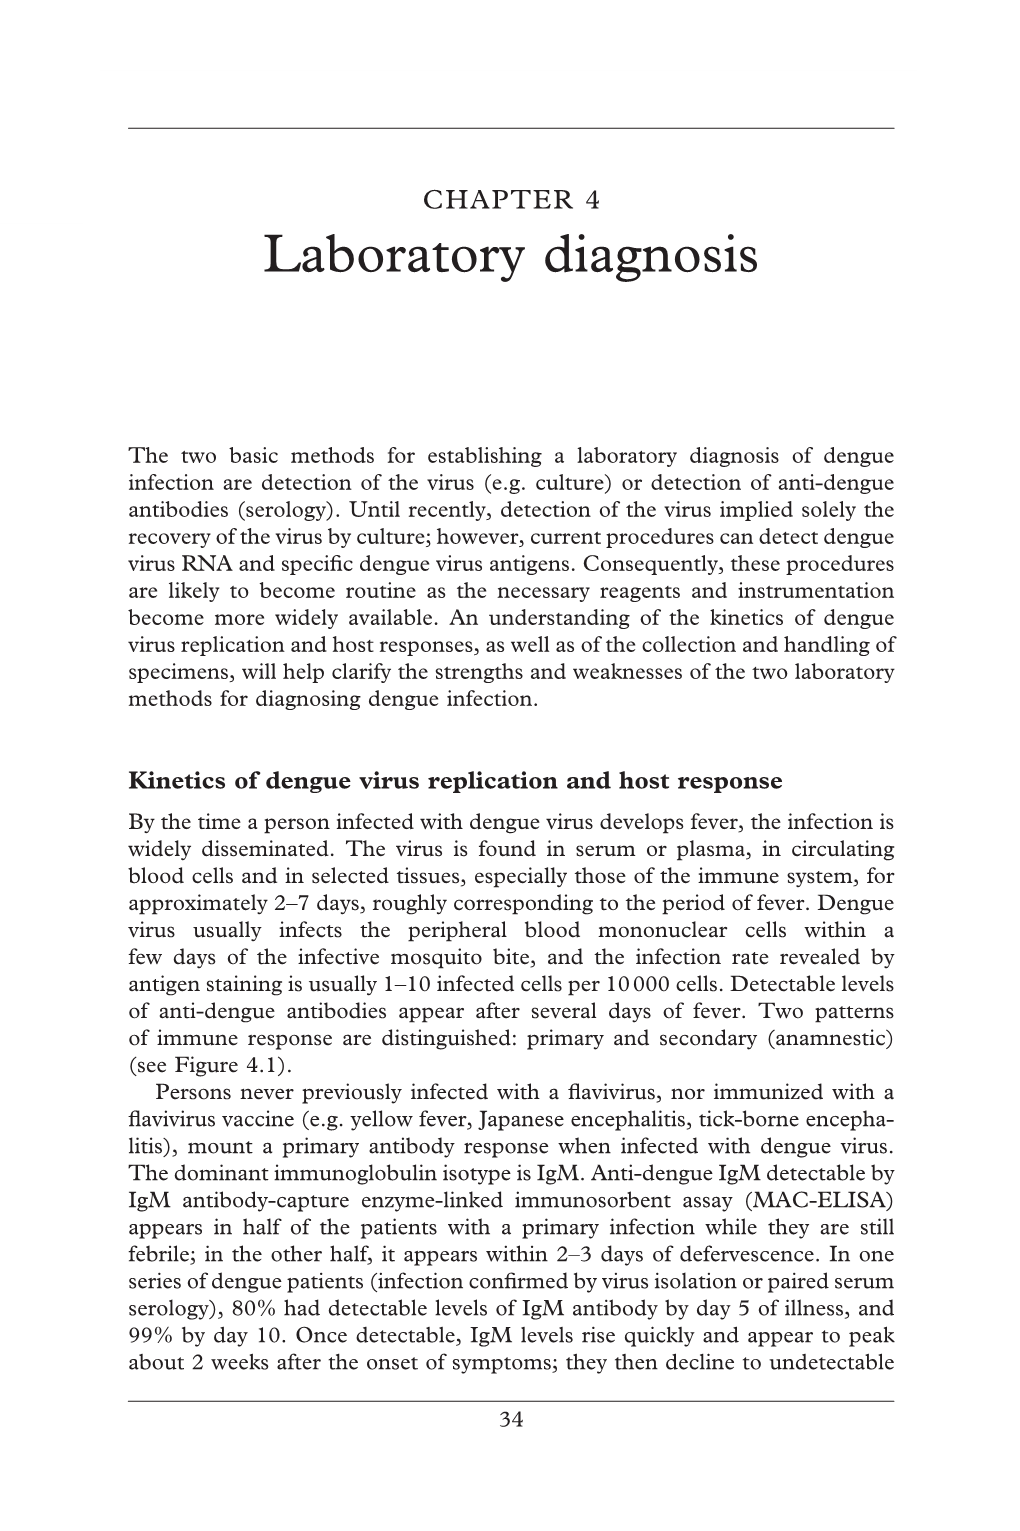 Laboratory Diagnosis